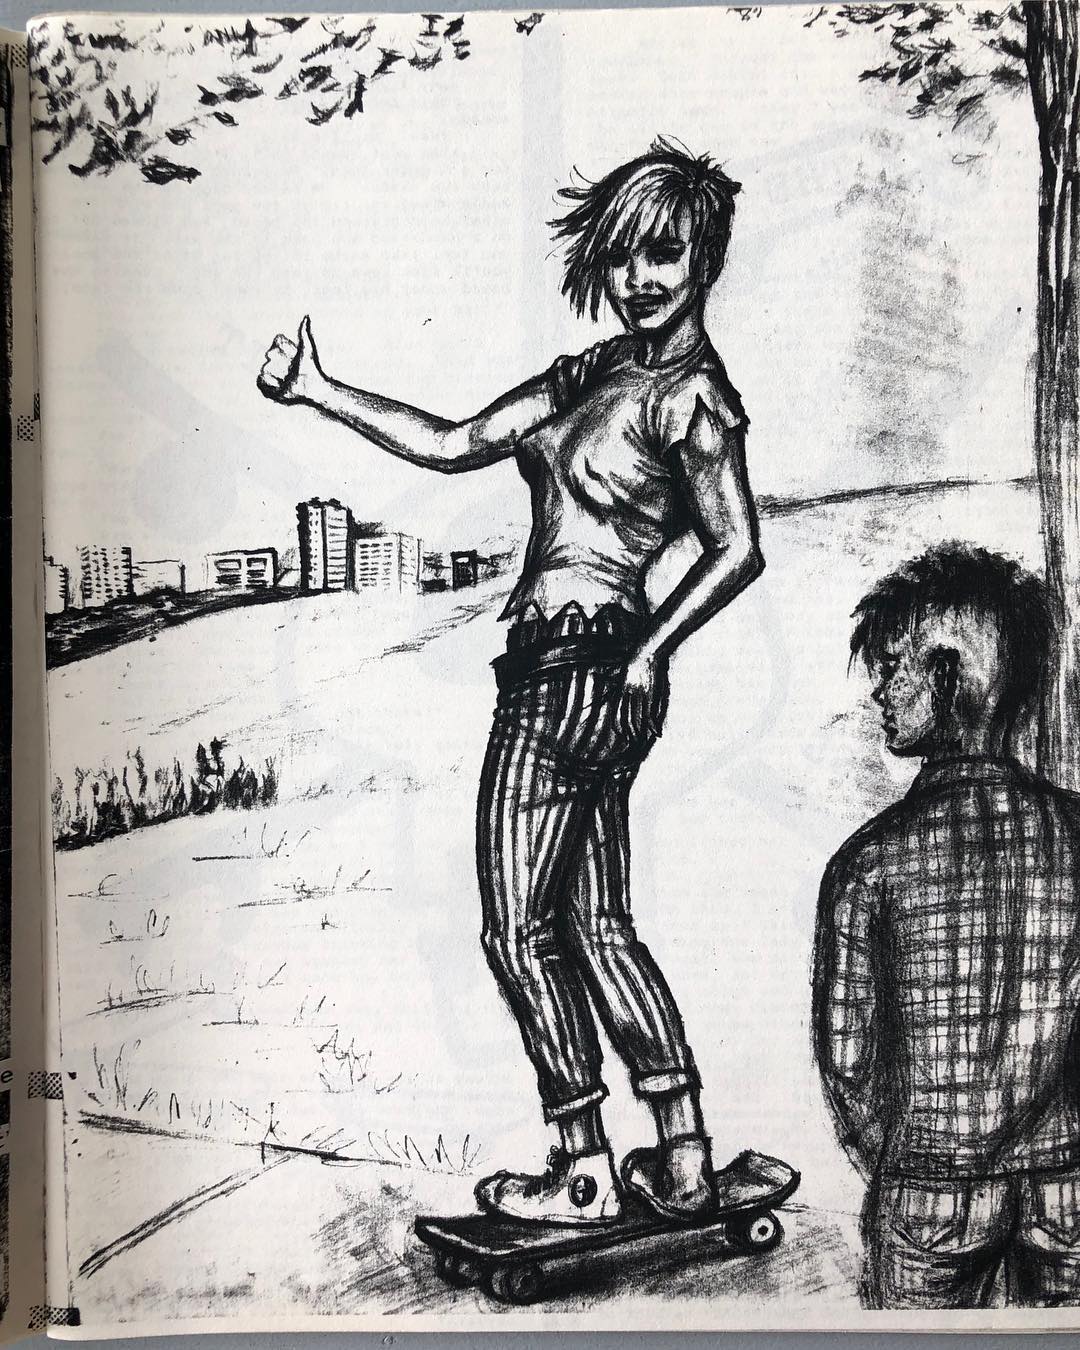 gb-jones-hitchhike-jds-zine-1989 – Womxn Skateboard History